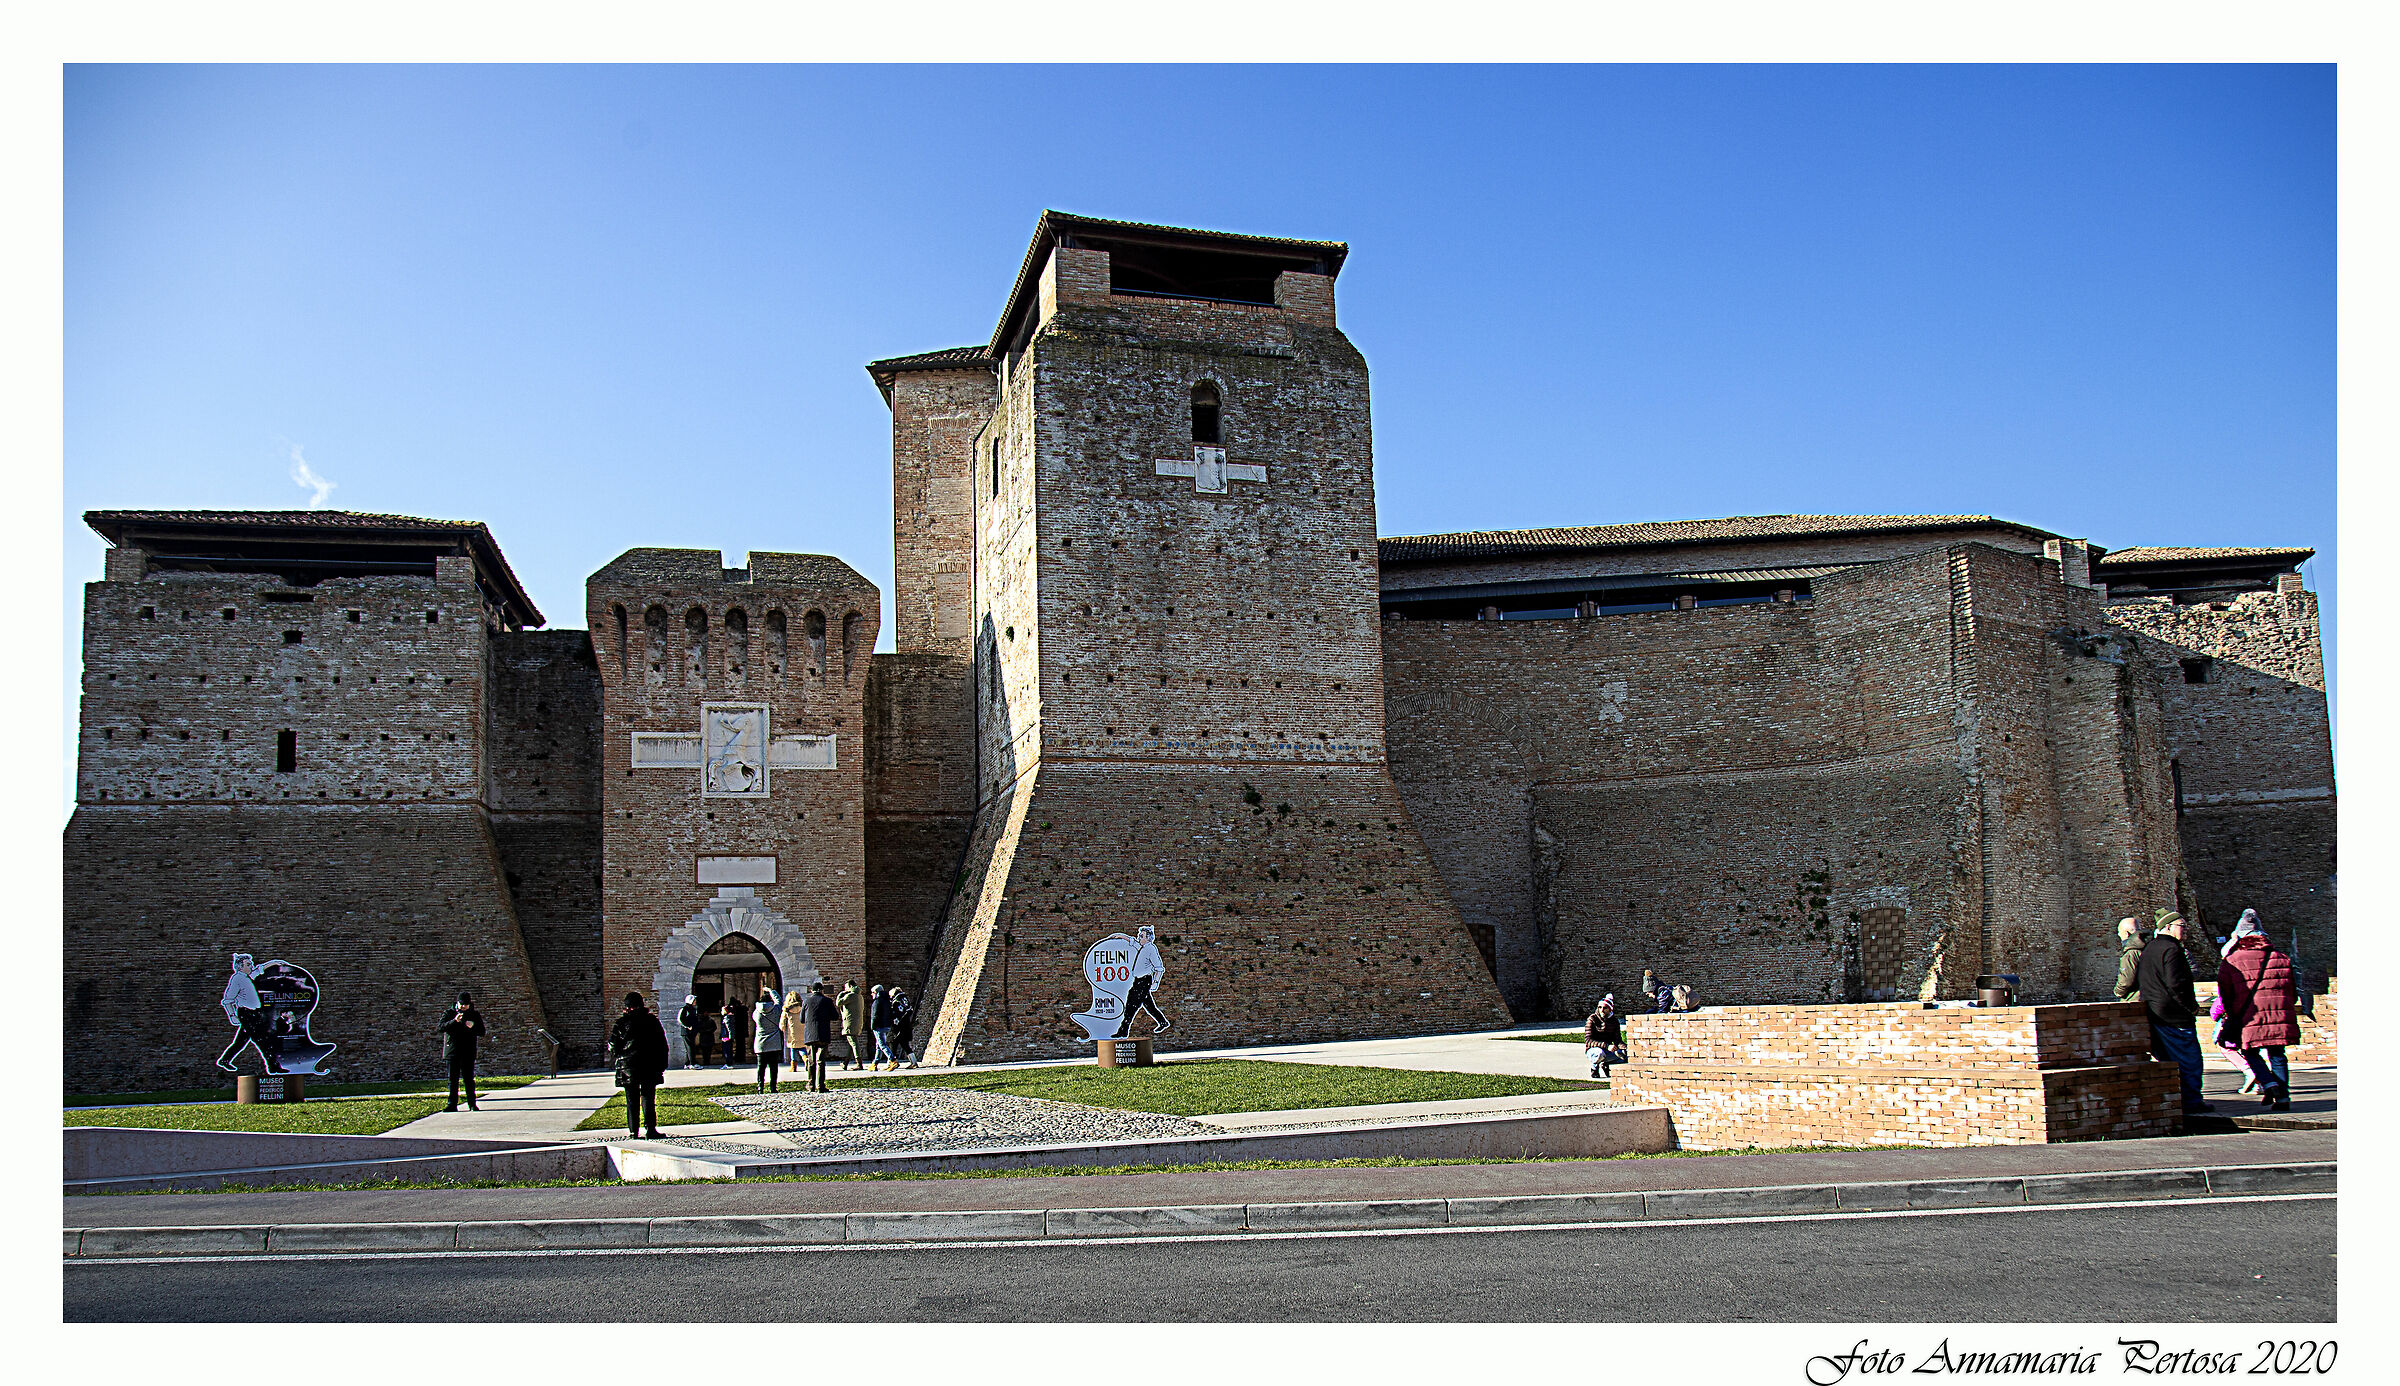 In Castel Sismondi the exhibition dedicated to Fellini...